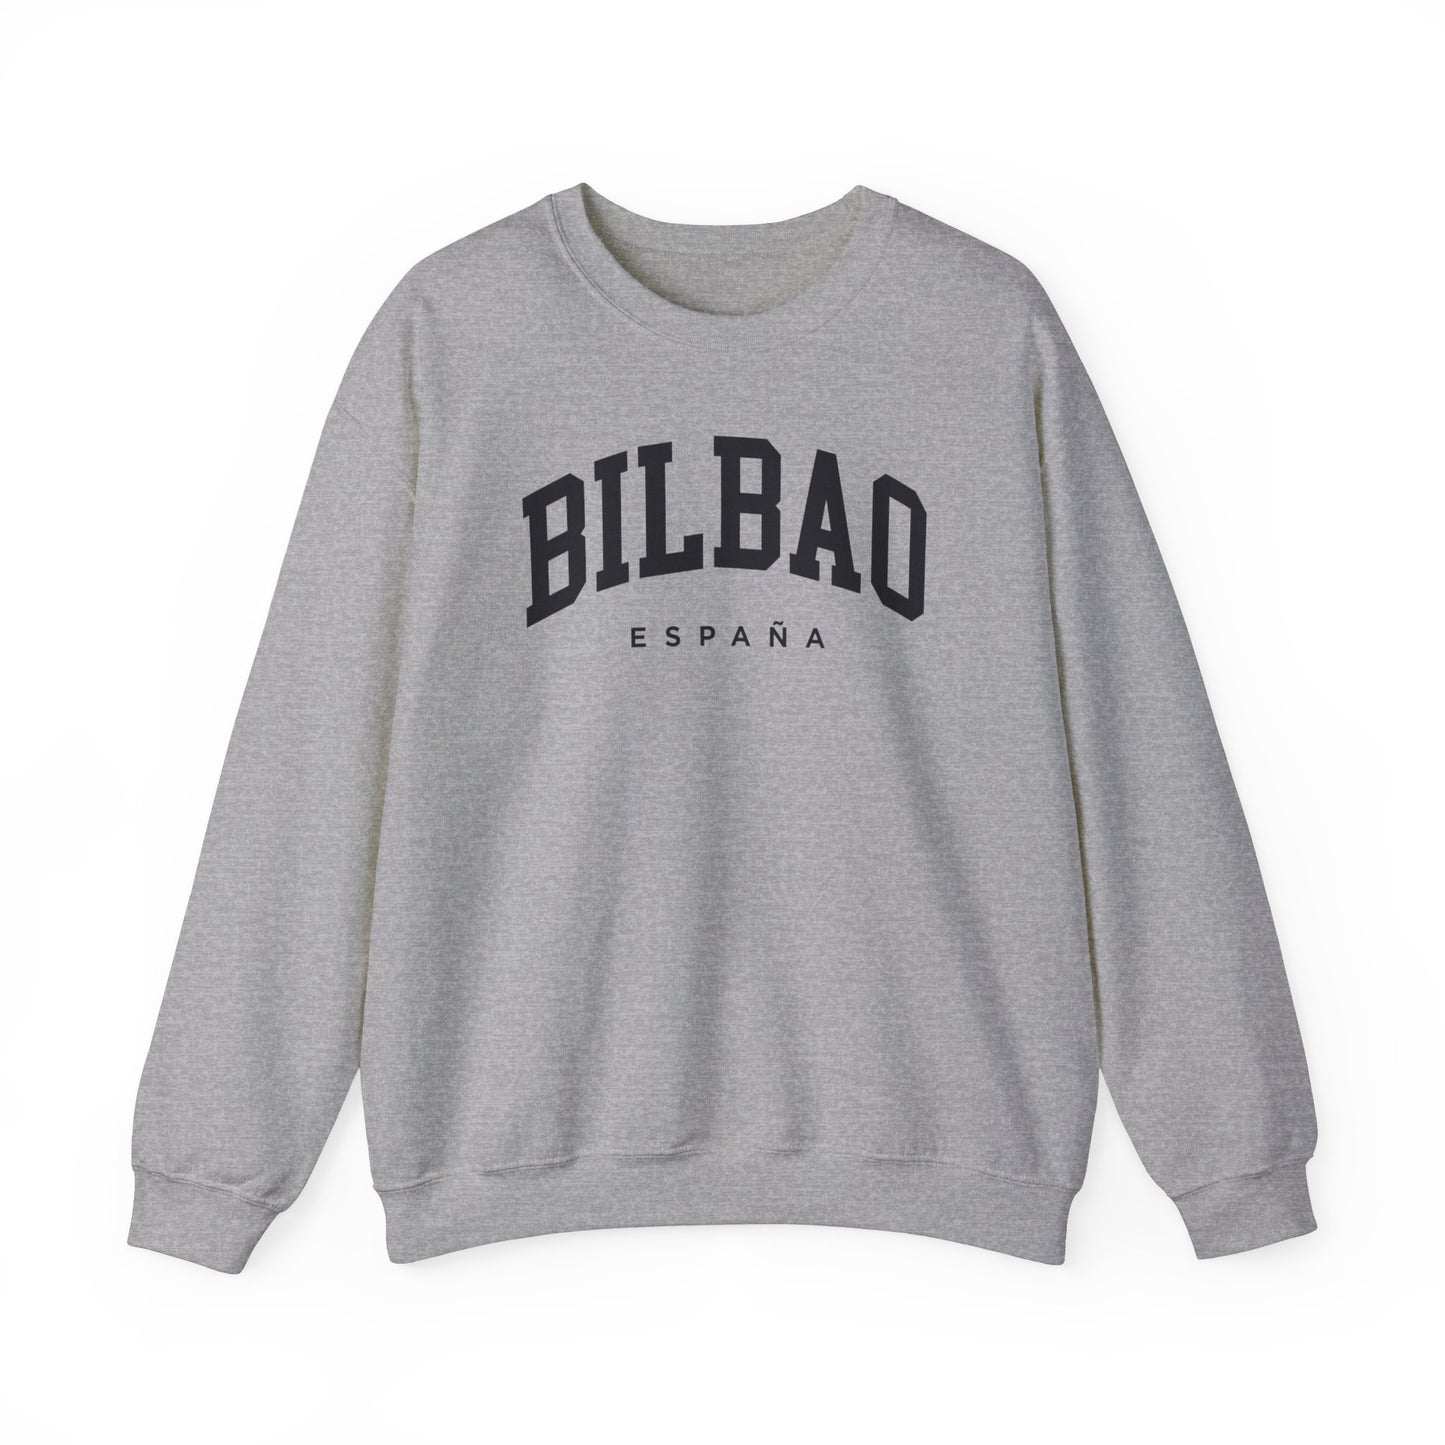 Bilbao Spain Sweatshirt